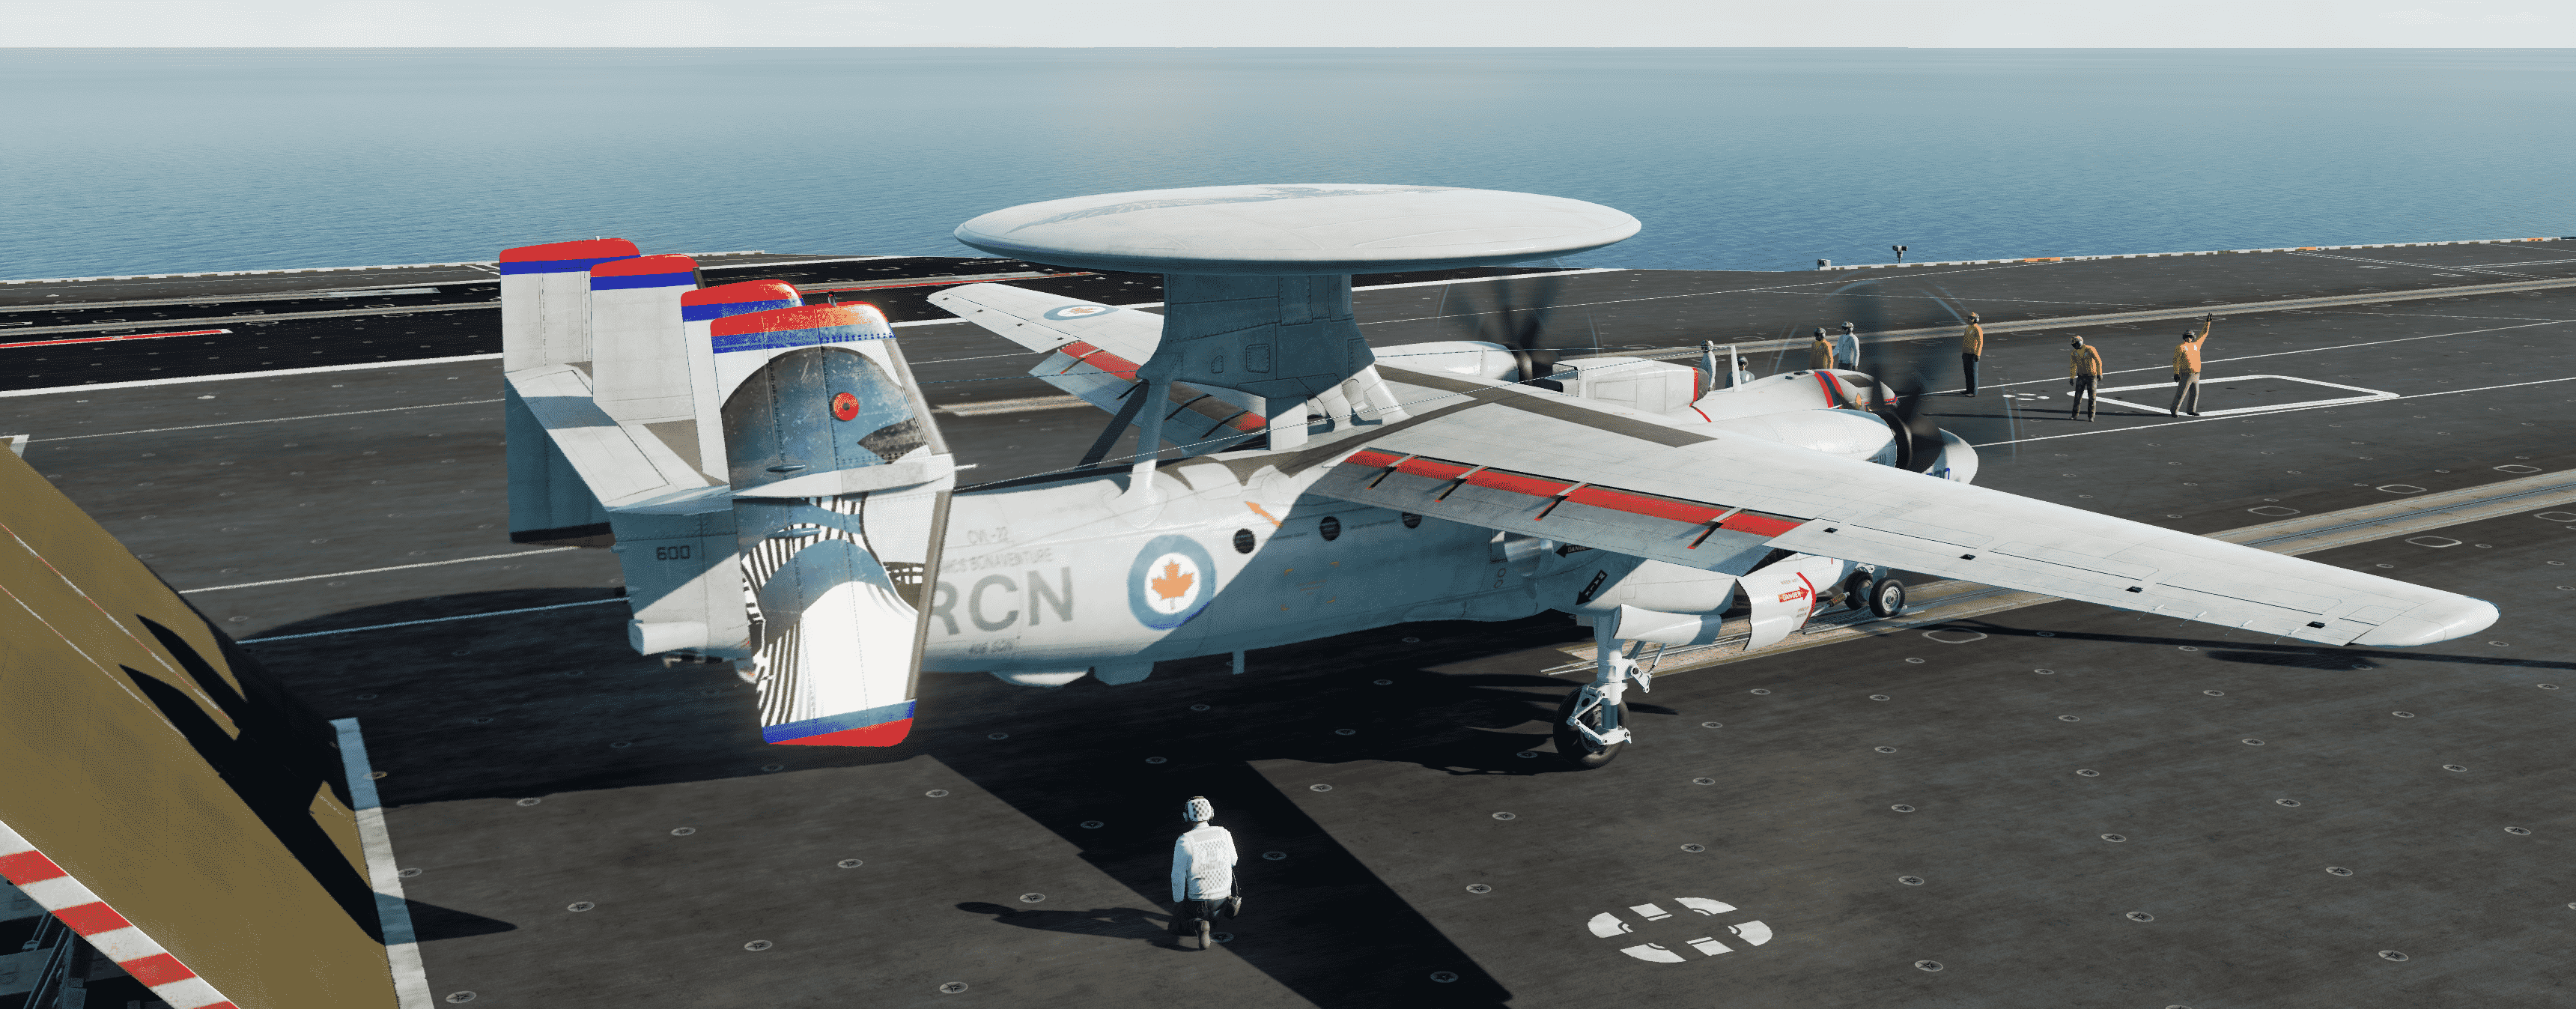 RCN E-2C Hawkeye Fictional Livery - 408 SQN